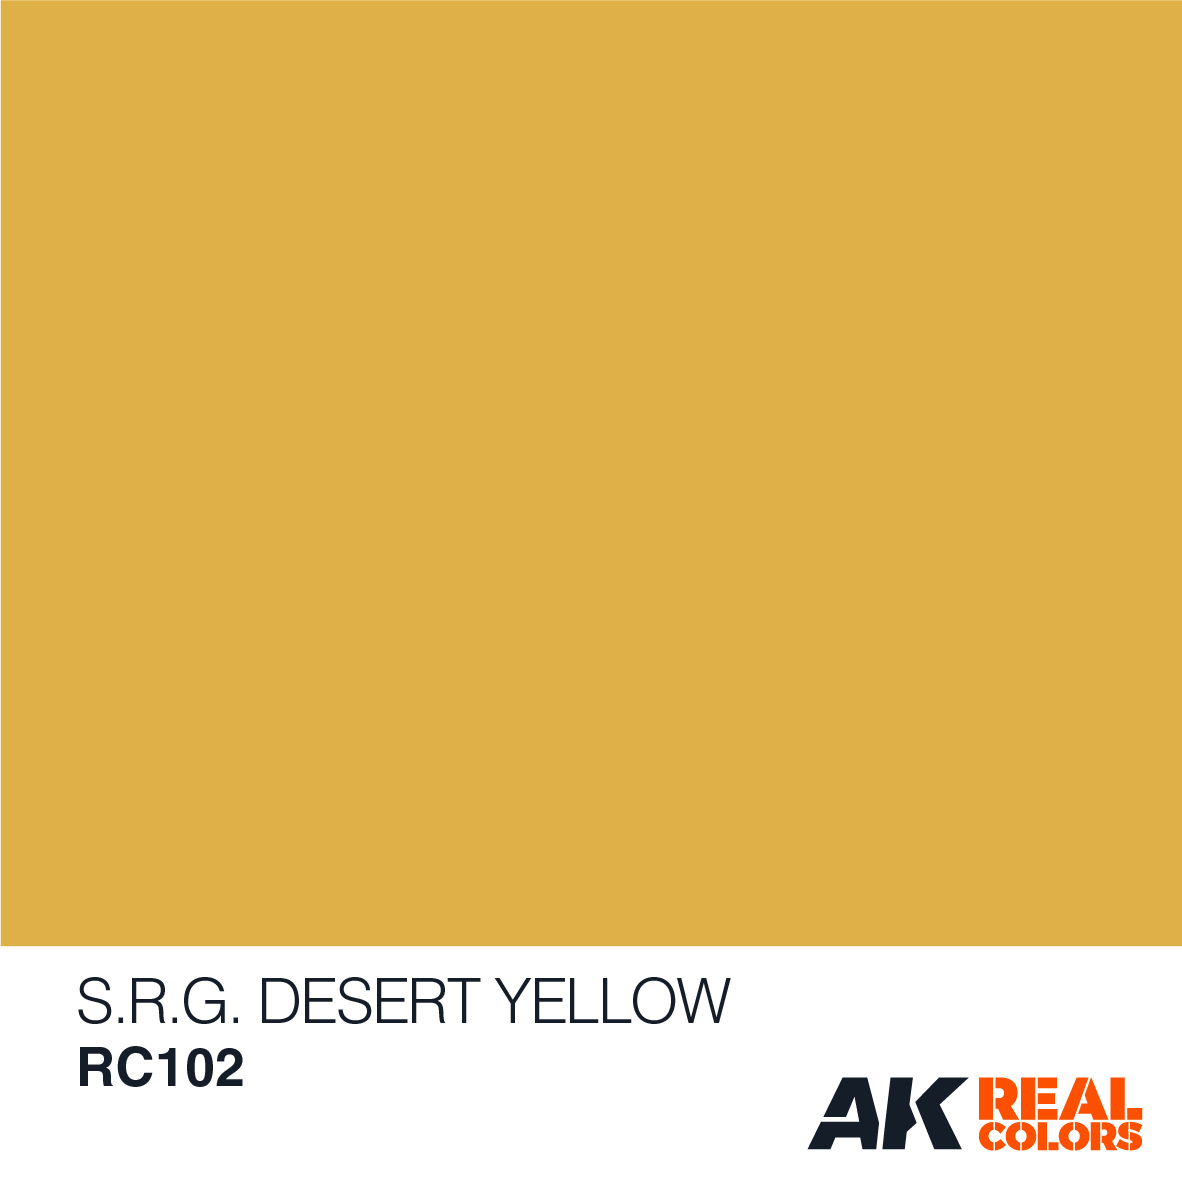 Syrian Republican Guard Desert Yellow